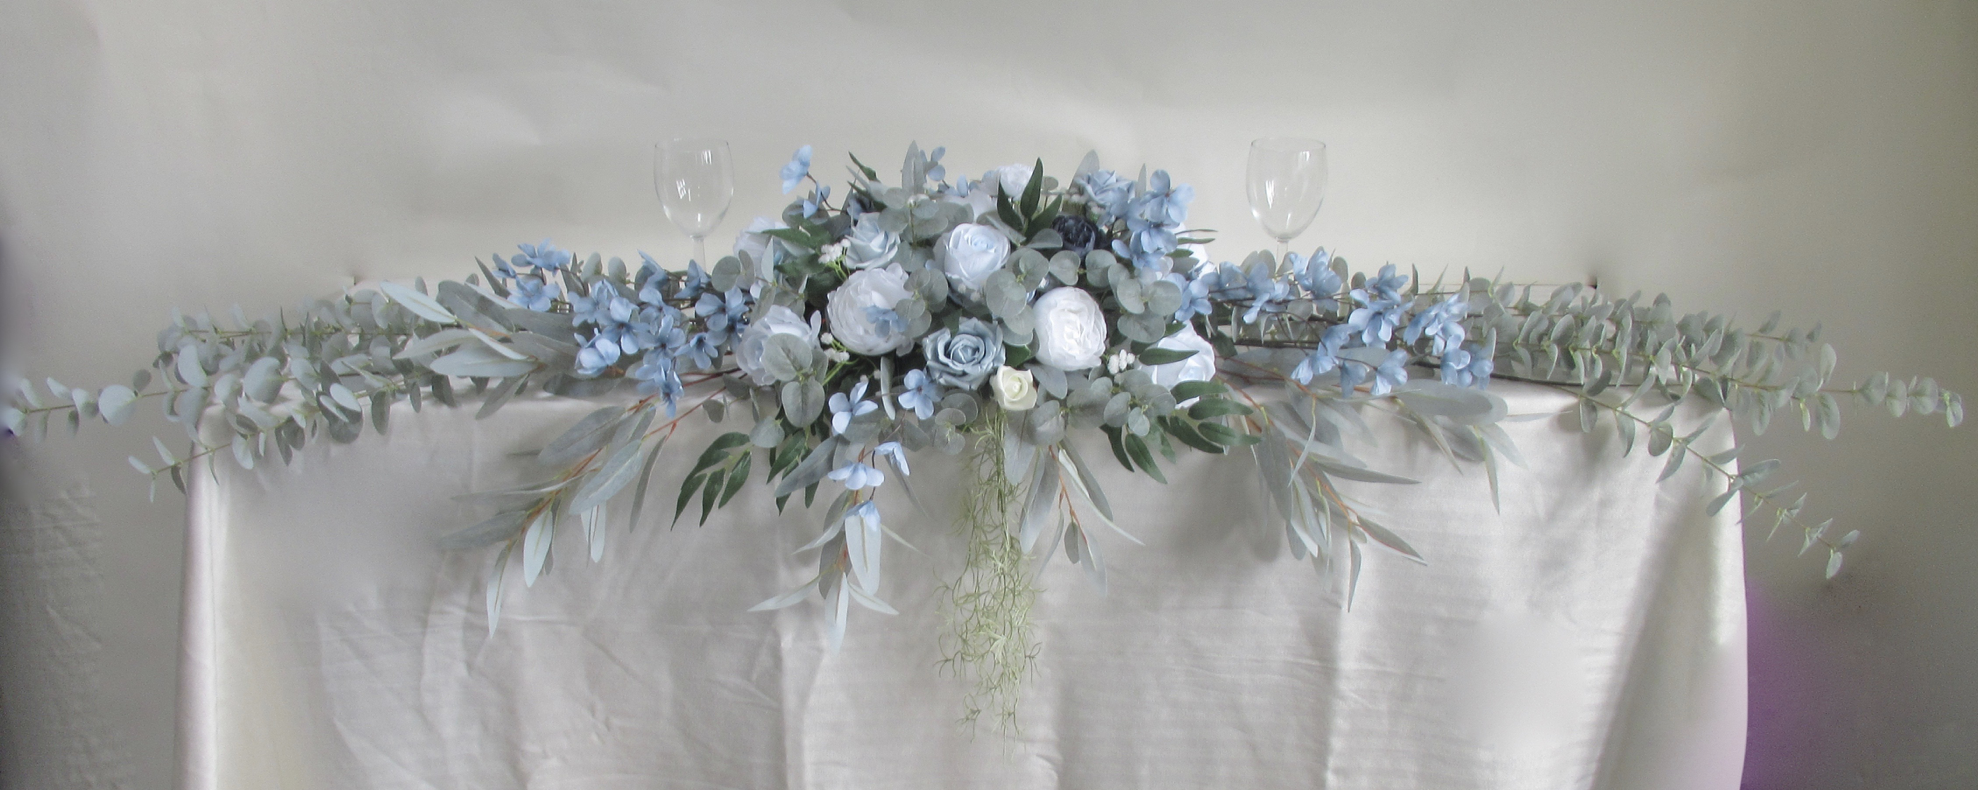 Sweetheart Table - Top Table Centrepiece dusky blue wedding flowers